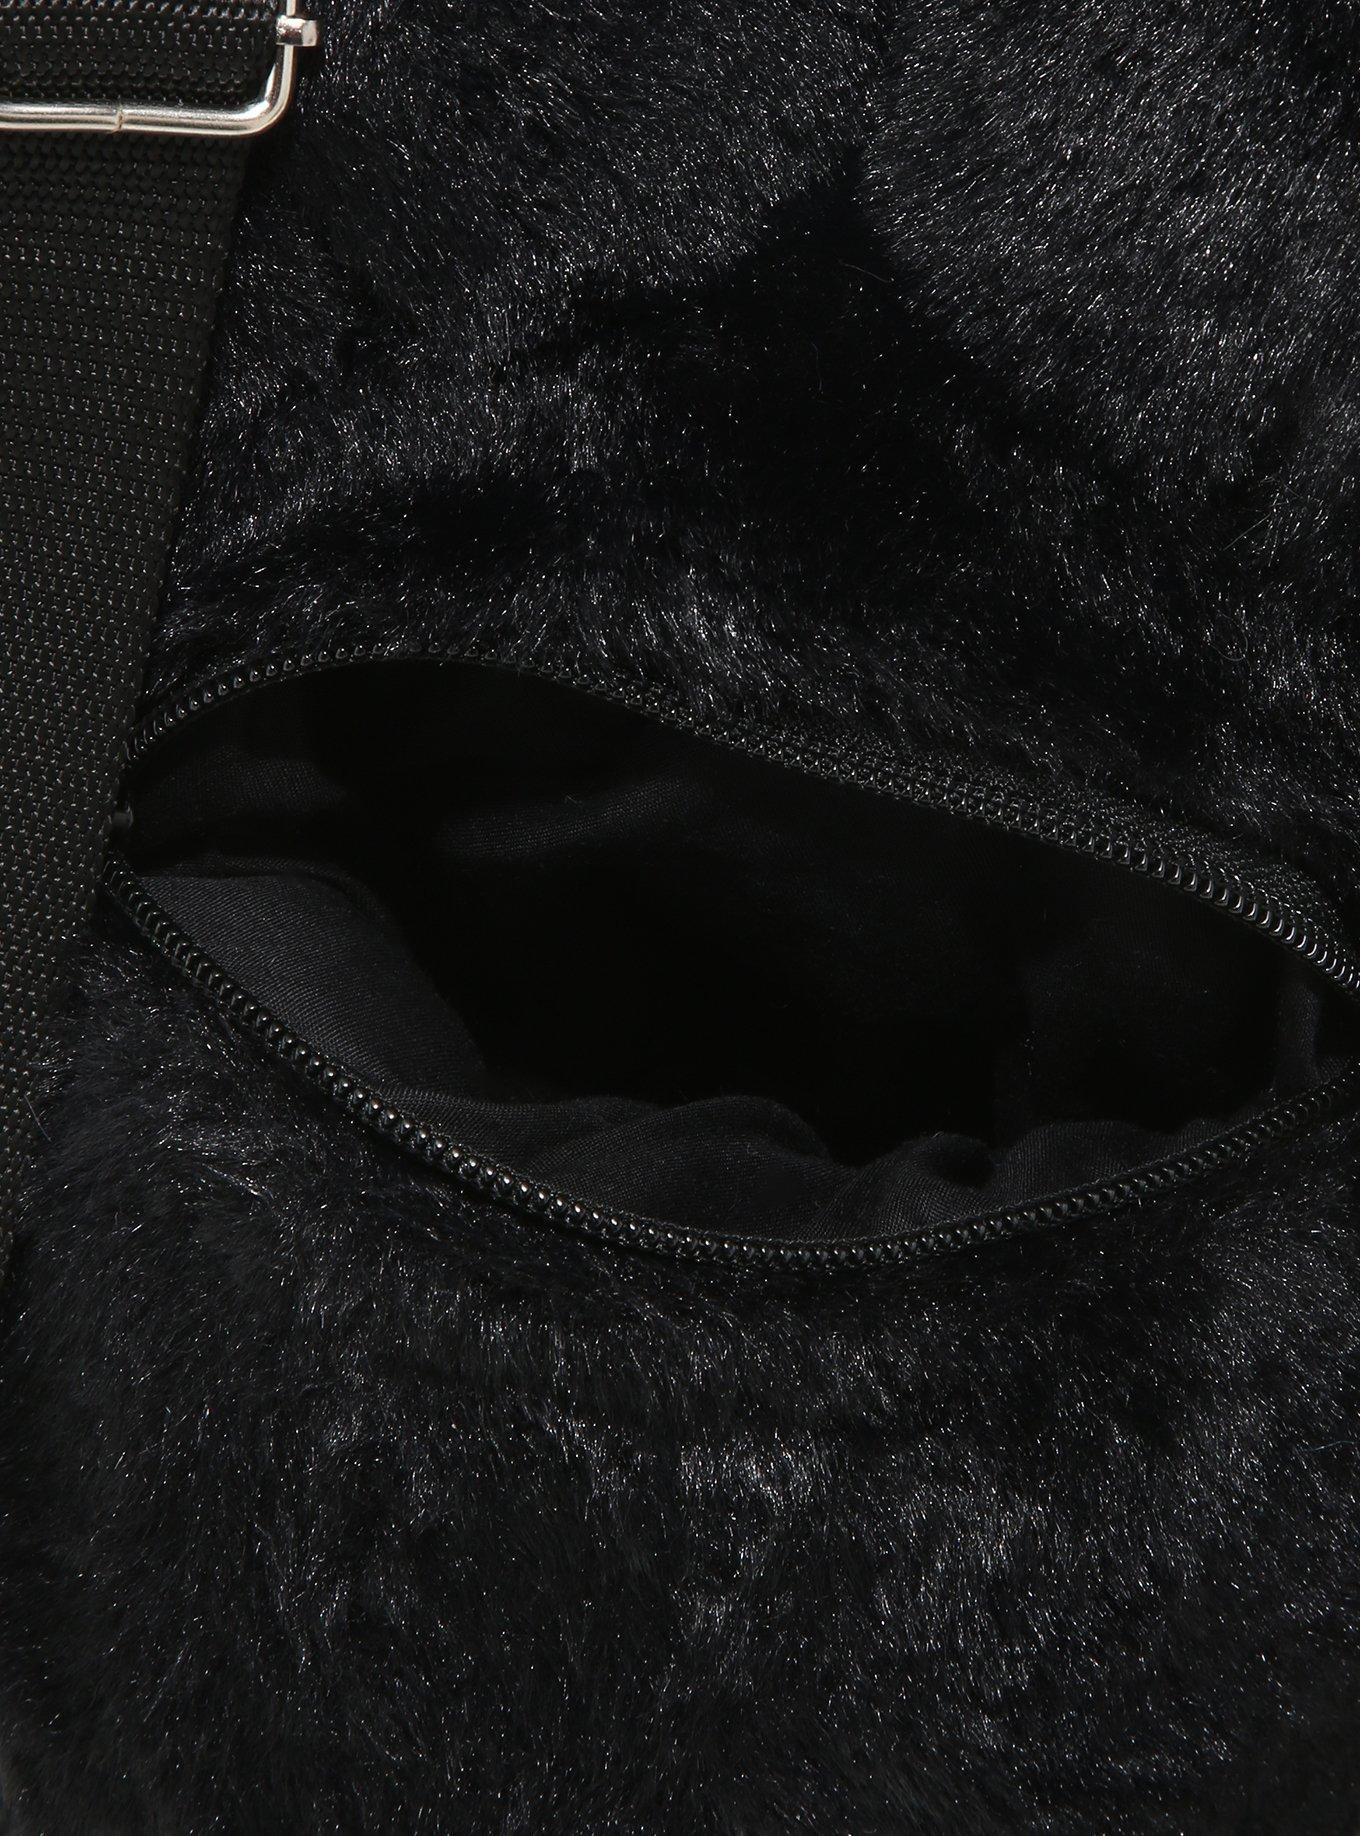 Black Double-Headed Teddy Bear Plush Backpack, , alternate